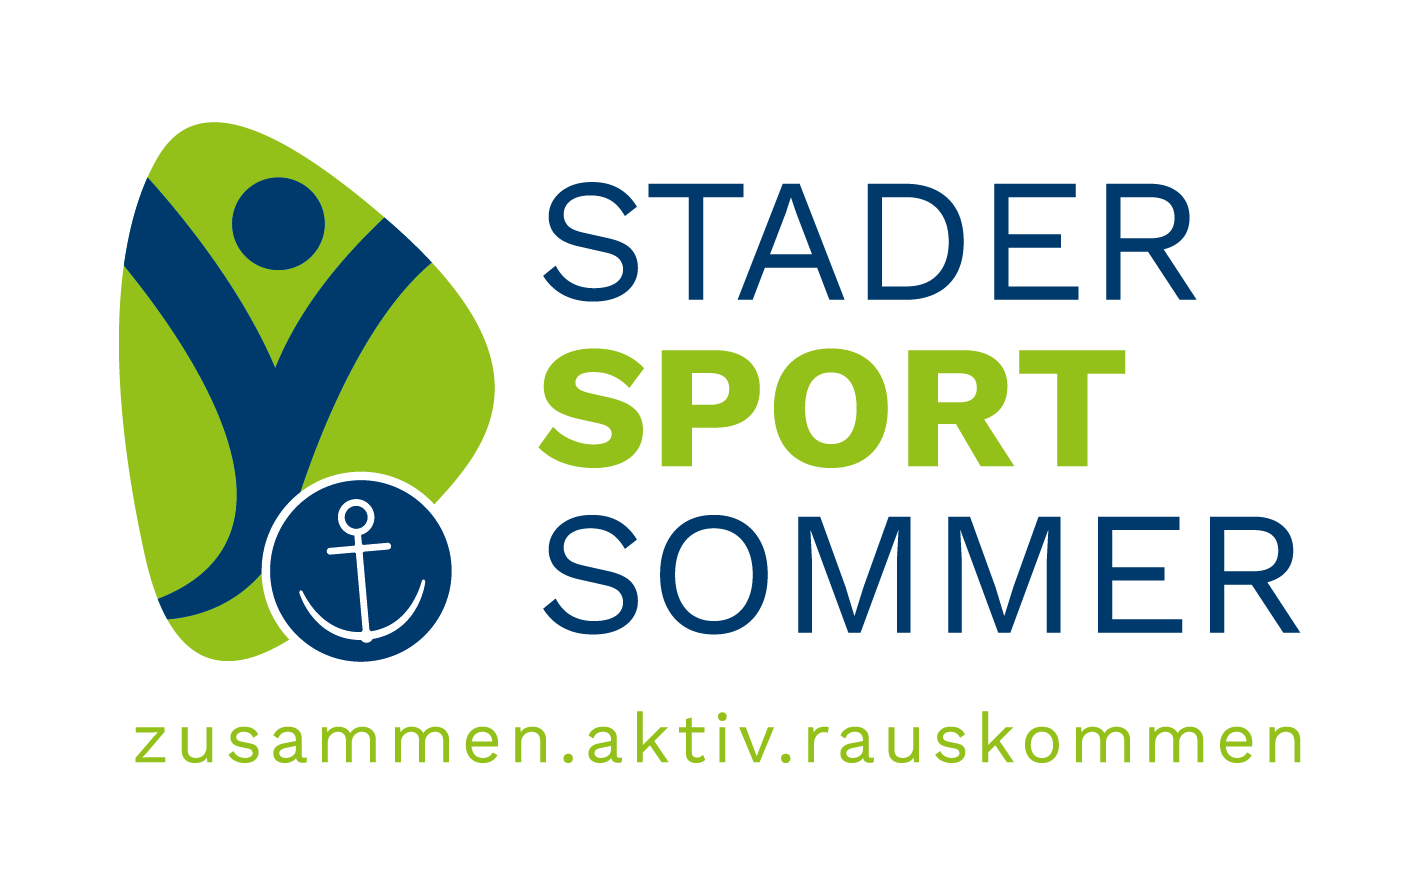 (c) Stader-sport-sommer.de